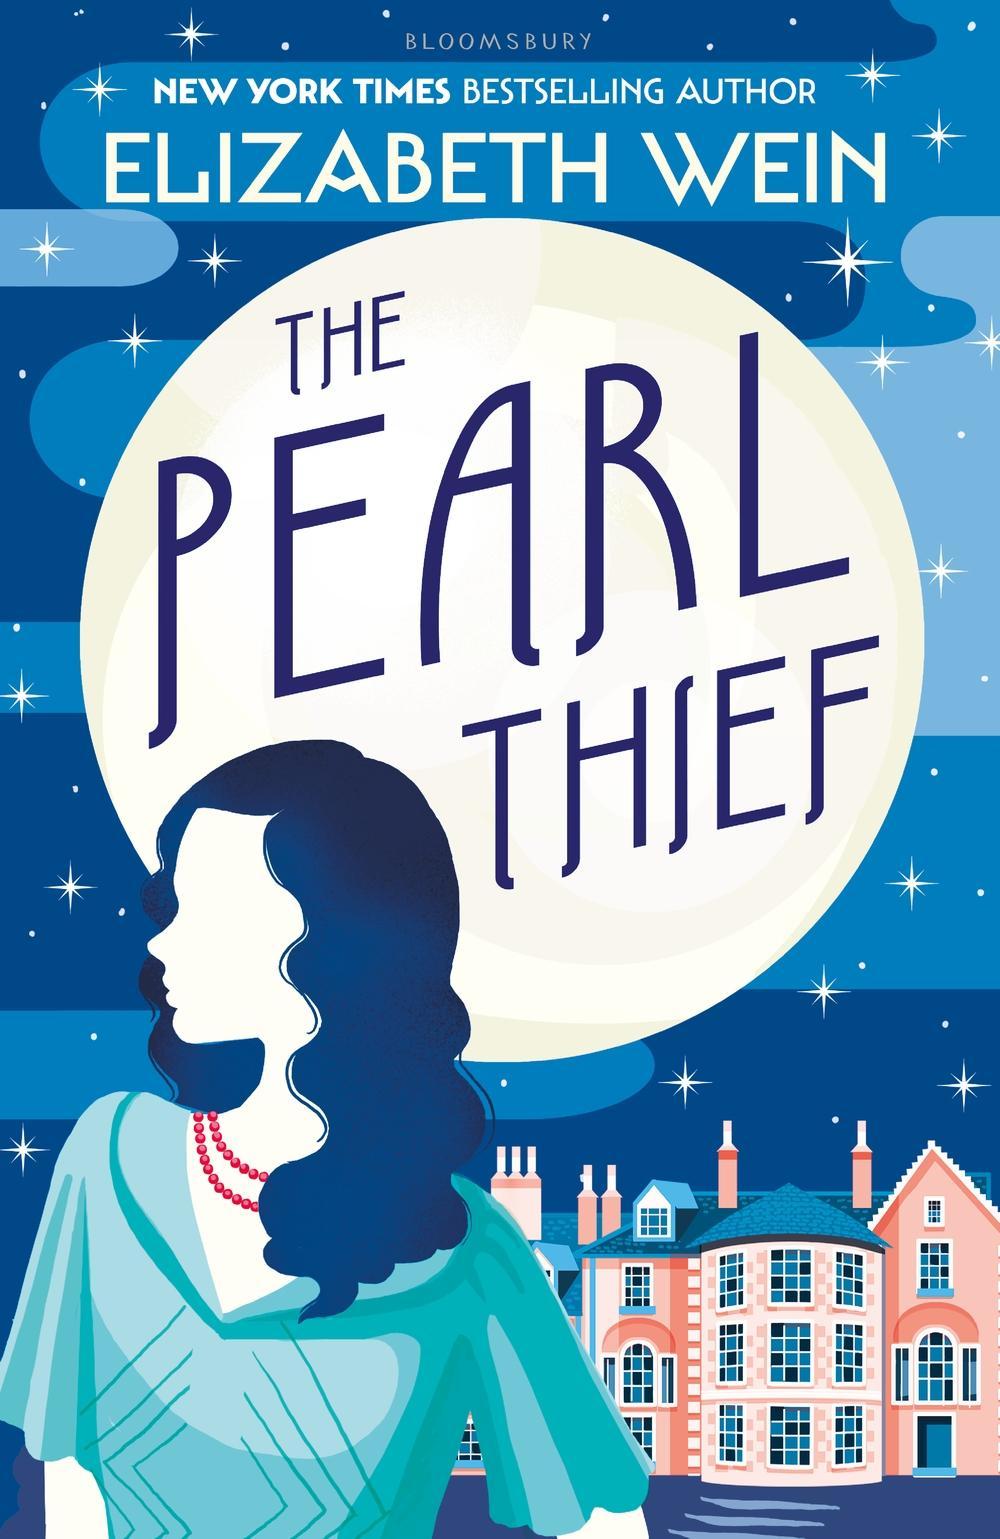 Pearl Thief